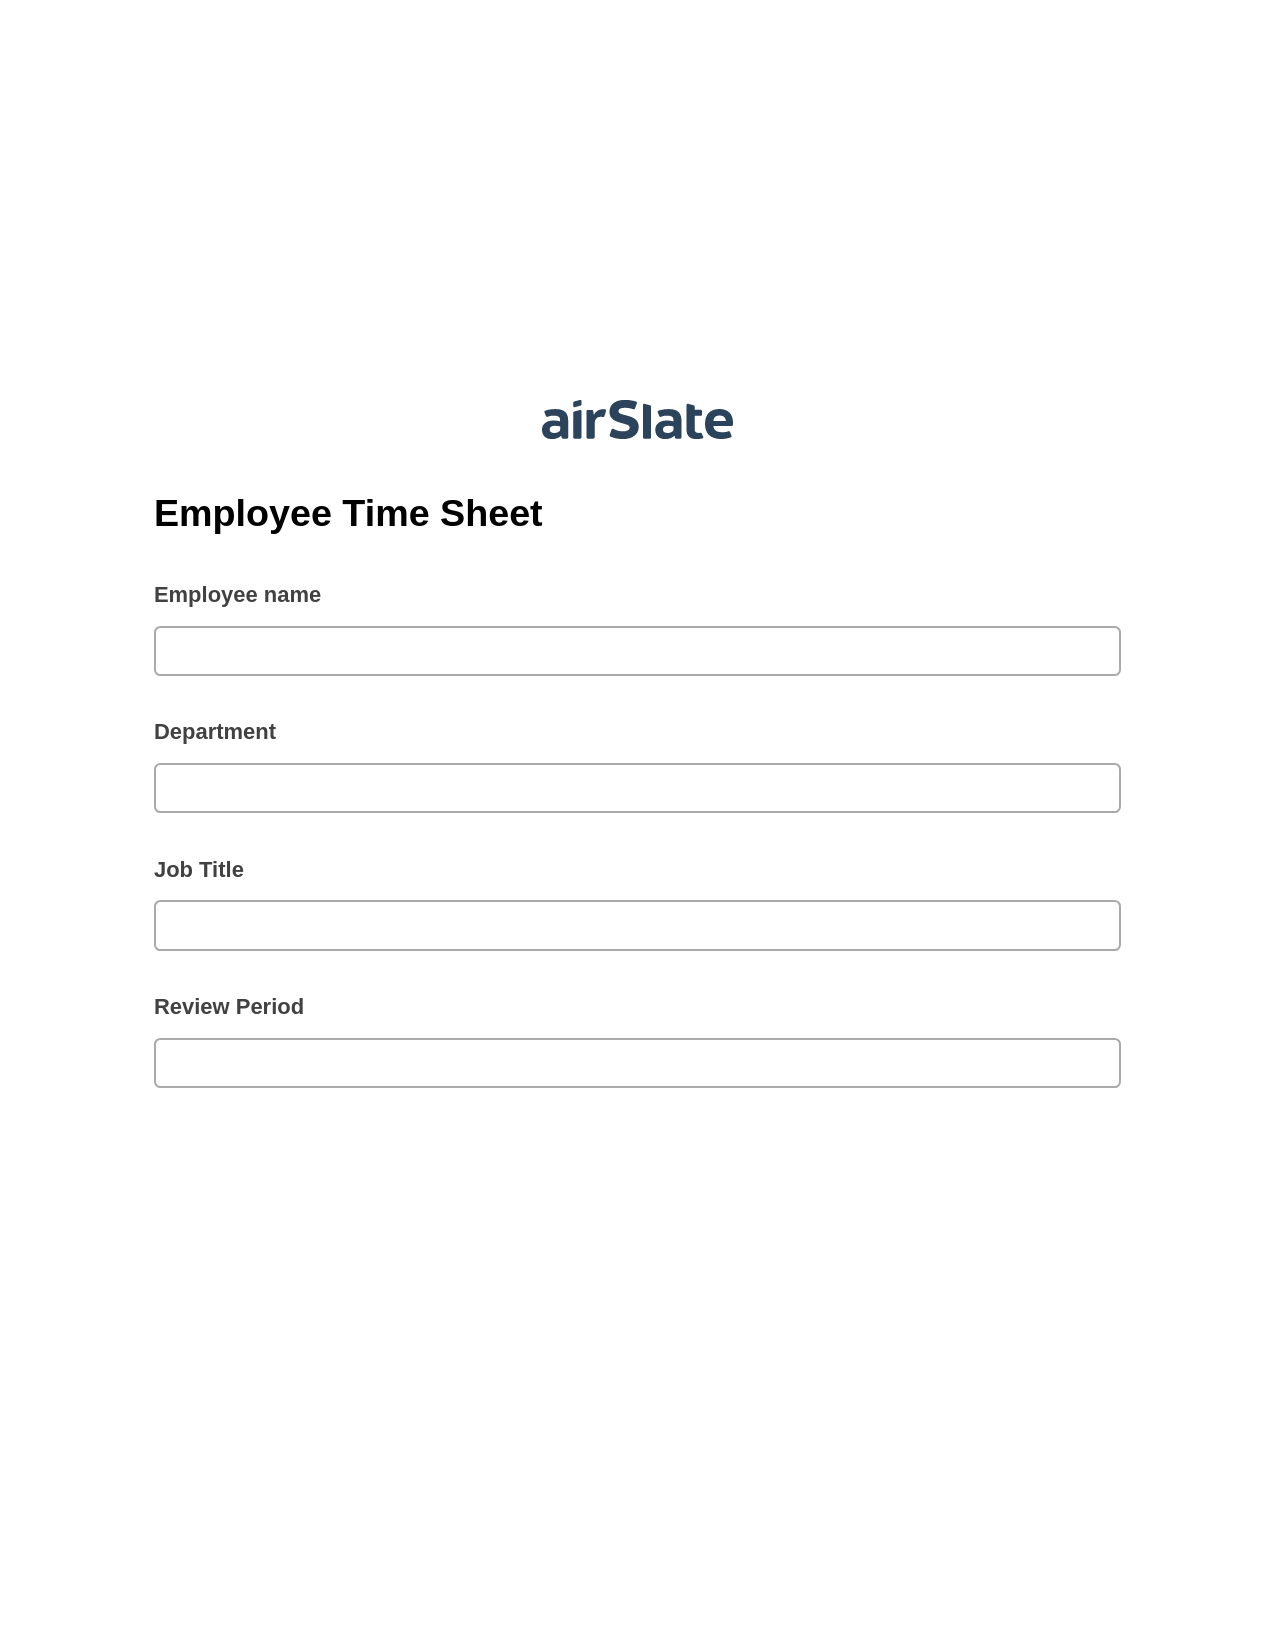 Multirole Employee Time Sheet Pre-fill from Excel Spreadsheet Bot, Invoke Salesforce Process Bot, Export to Google Sheet Bot